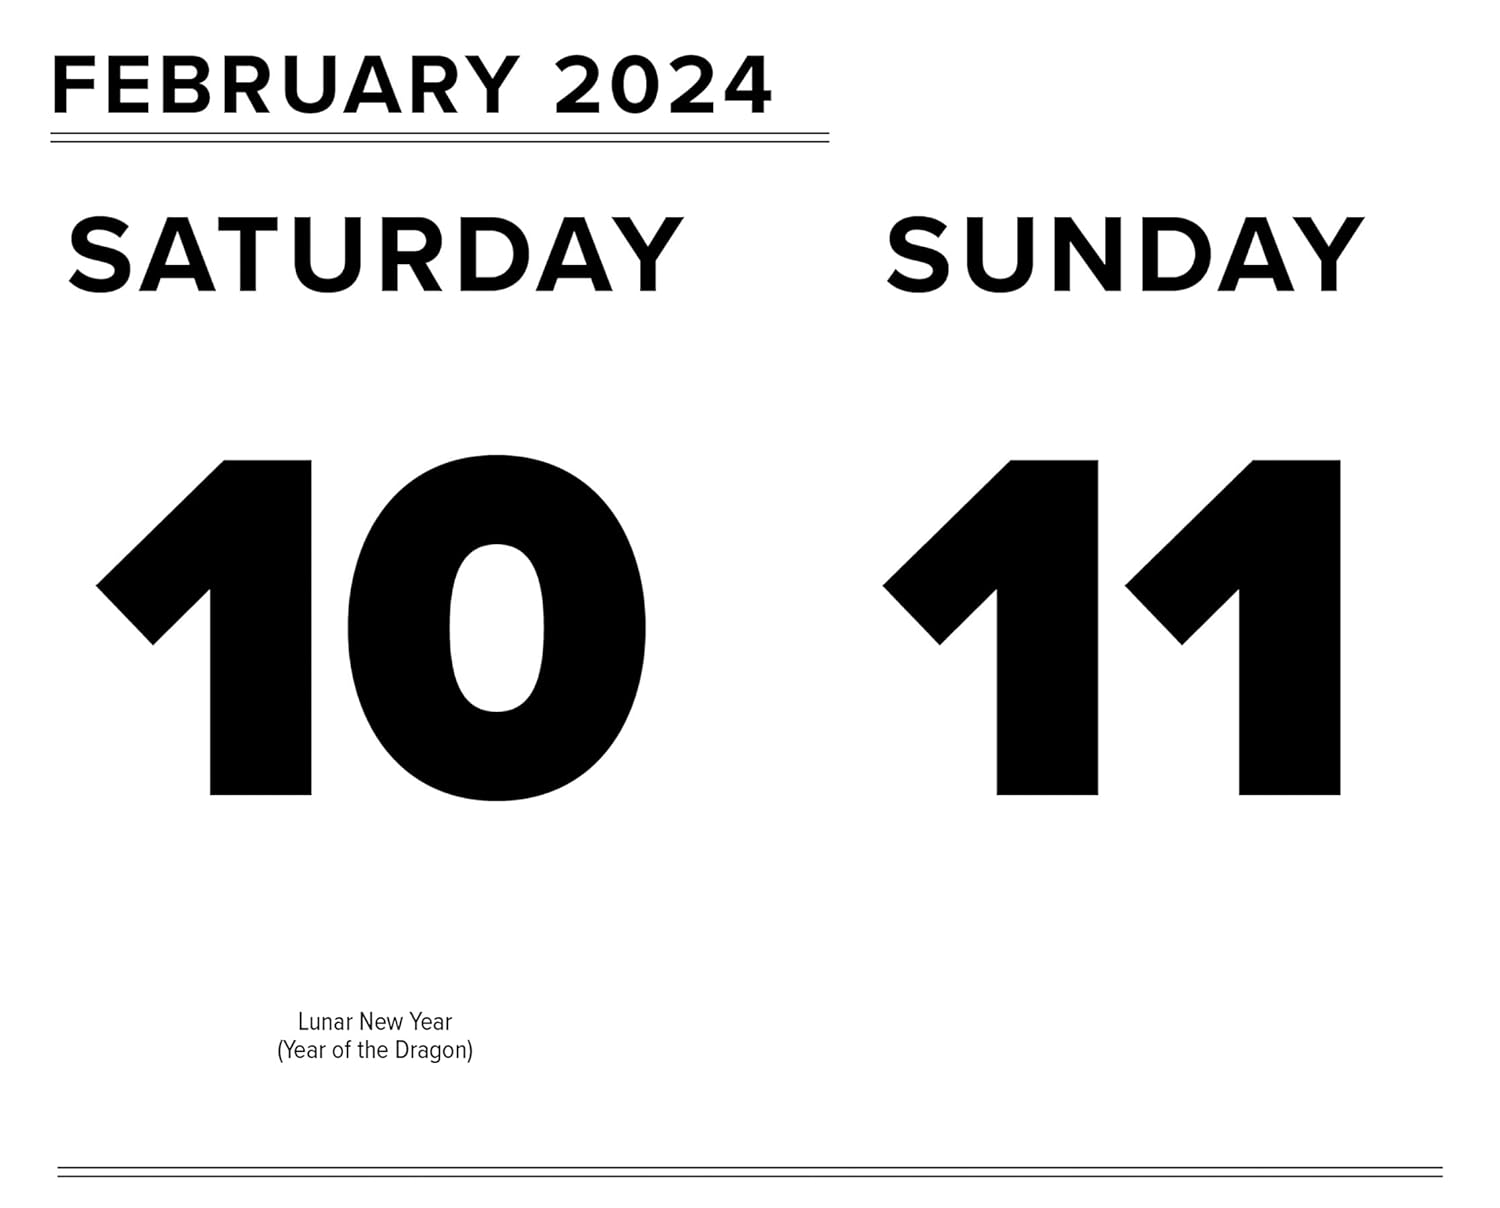 big-day-2024-calendar